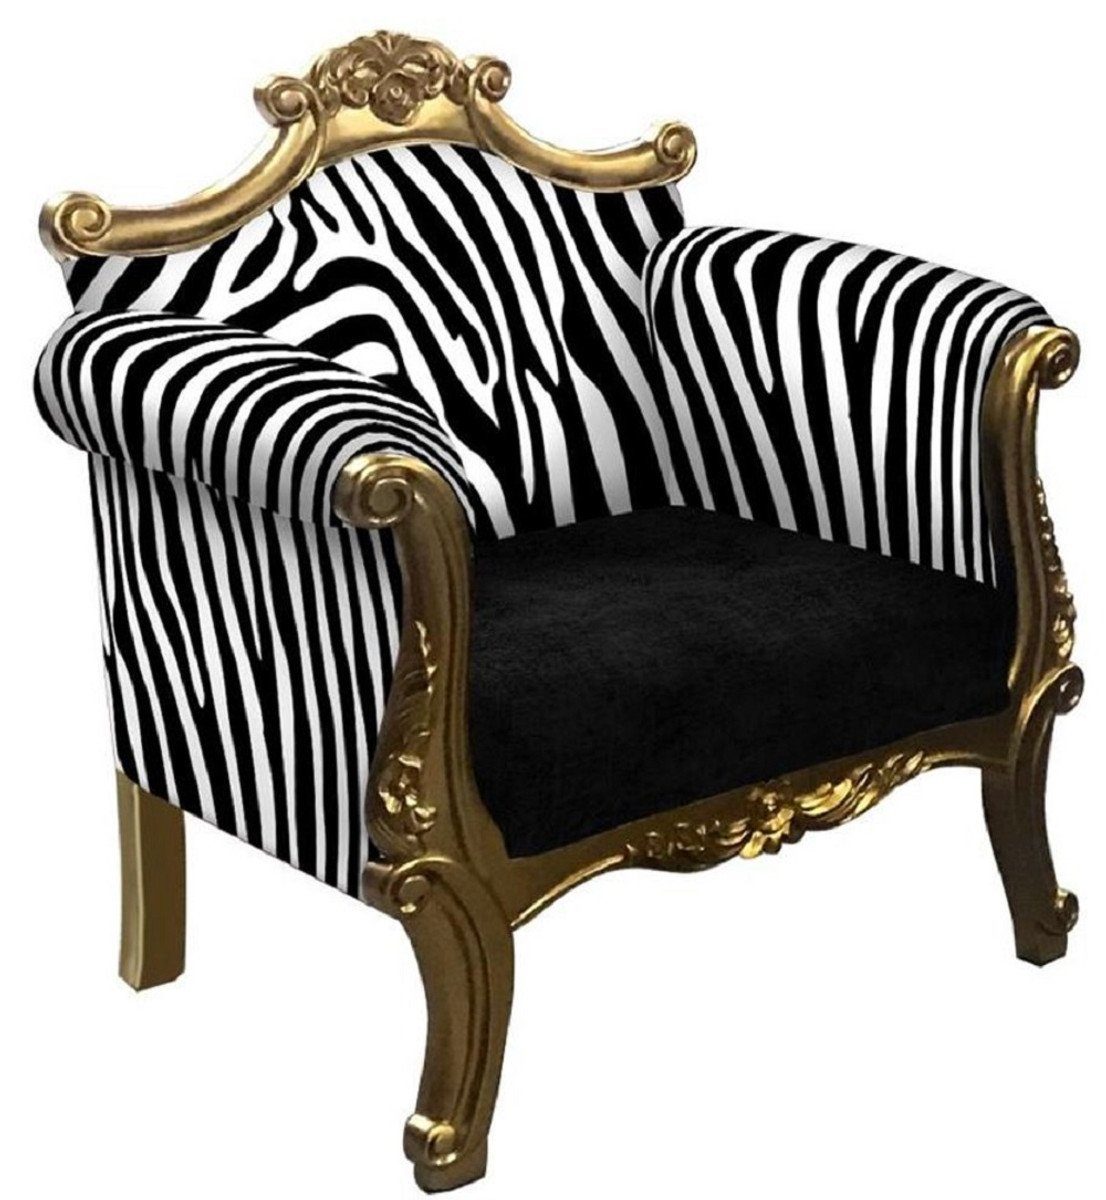 Casa Padrino Sessel Barock Sessel im Zebra Design Schwarz / Weiß / Gold - Handgefertigter Wohnzimmer Sessel im Barockstil - Barock Wohnzimmer Möbel